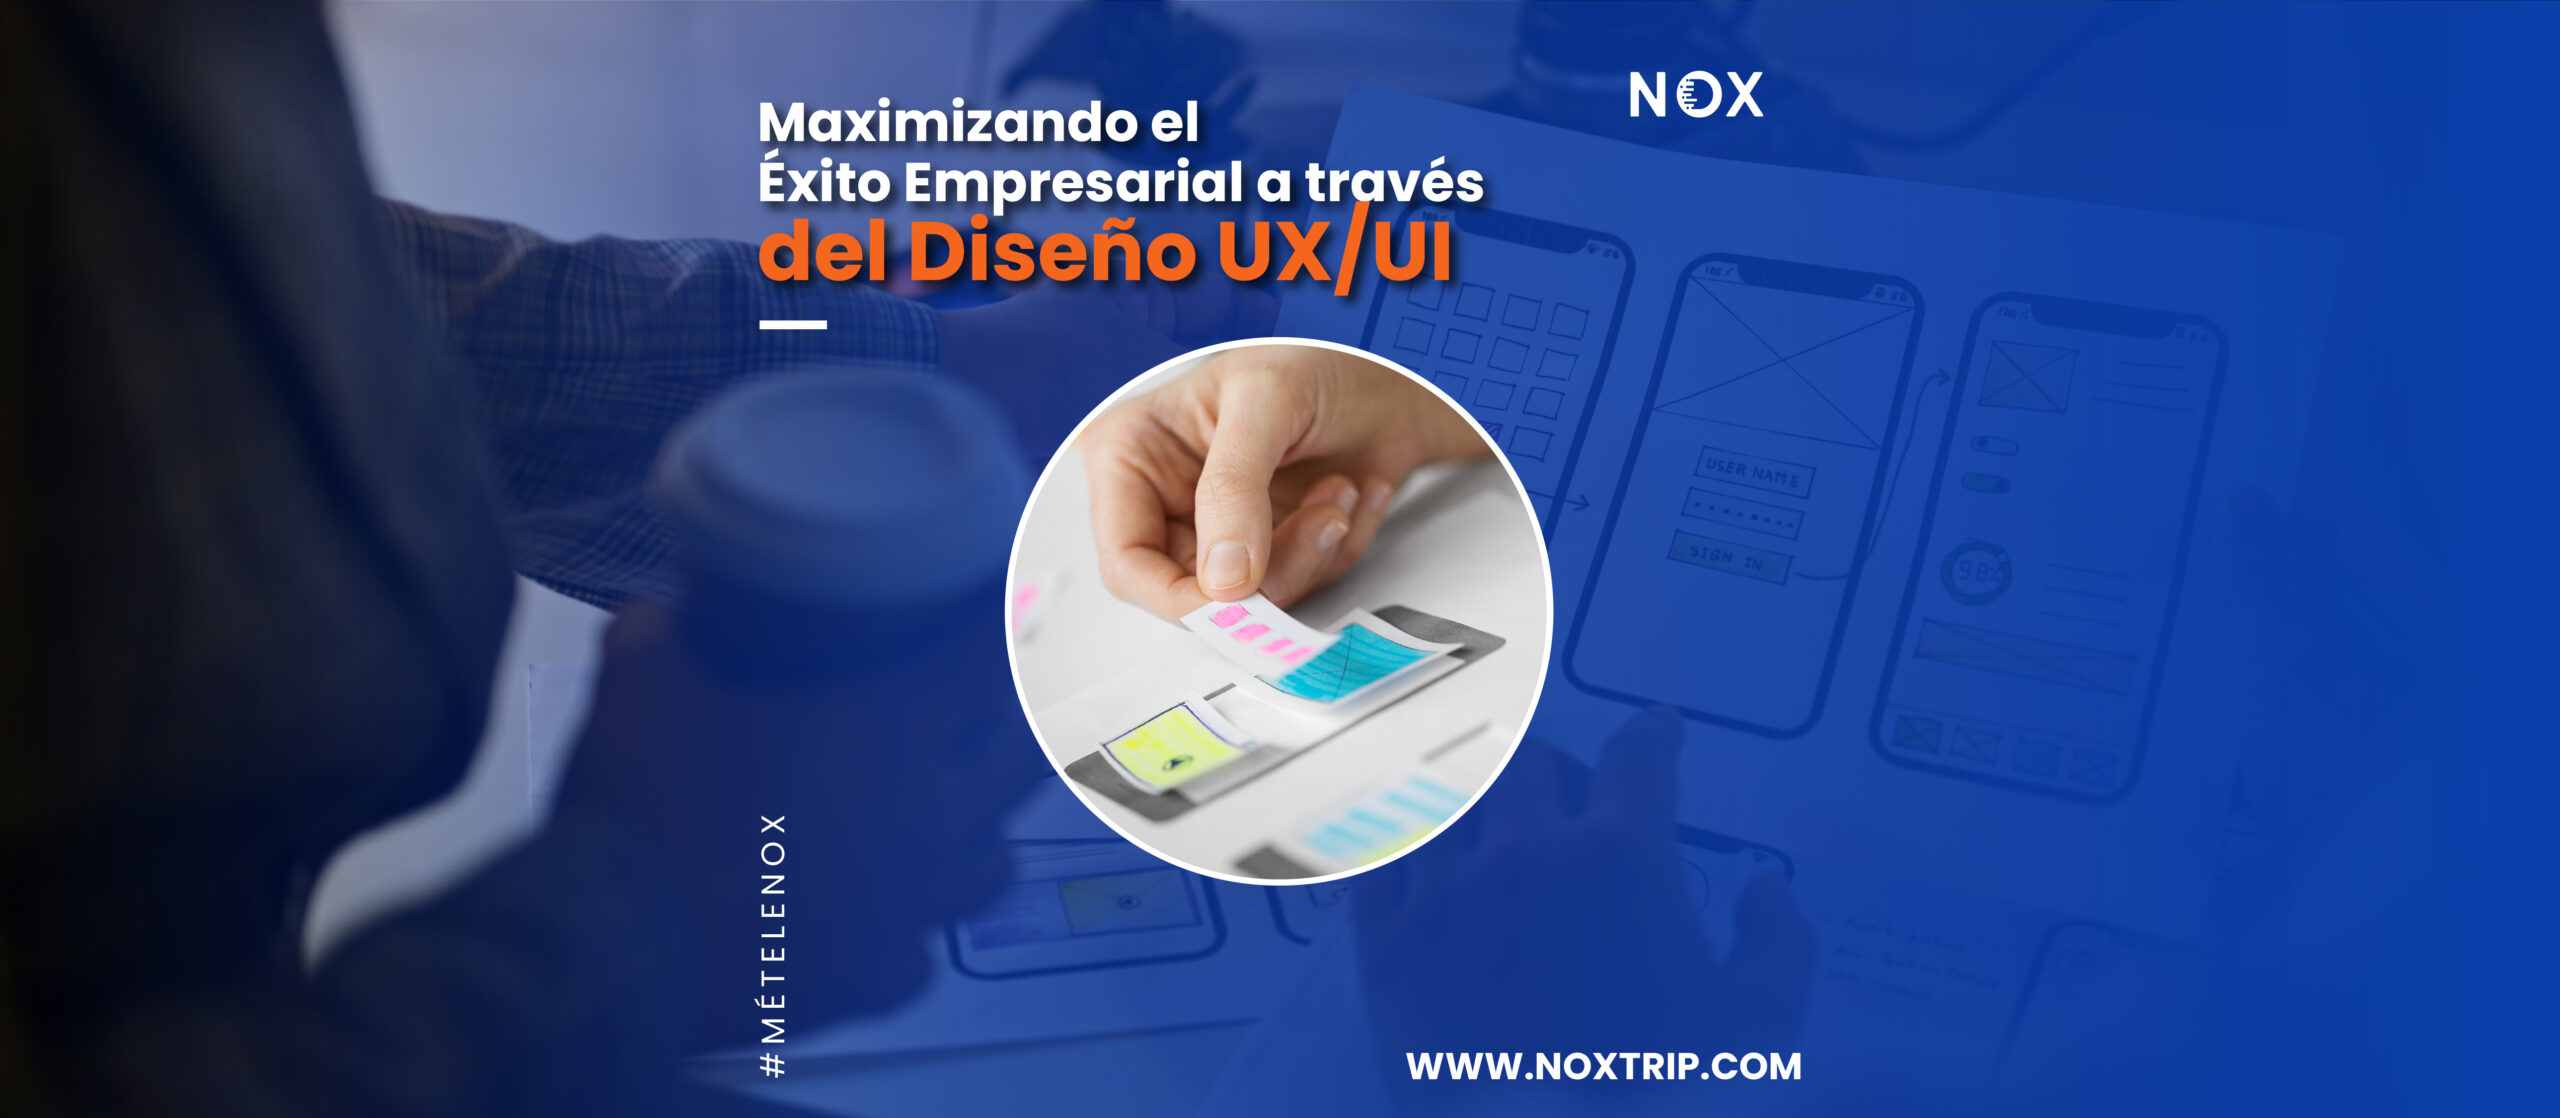 NOX Marketing Digital, Maximizando el Éxito Empresarial a través del Diseño UXUI